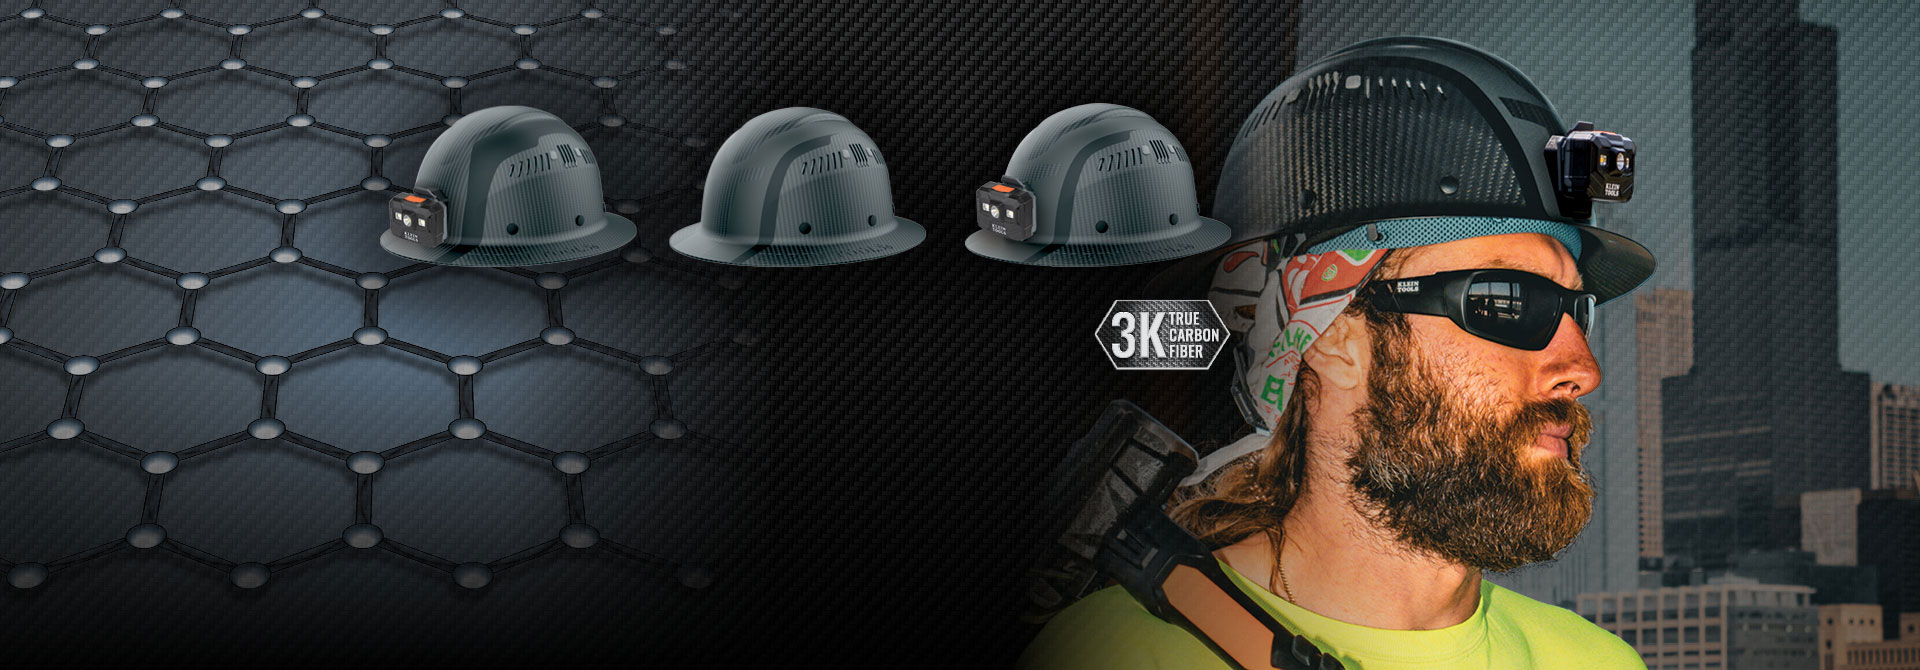 K12 Series 
Carbon Fiber Hard Hats